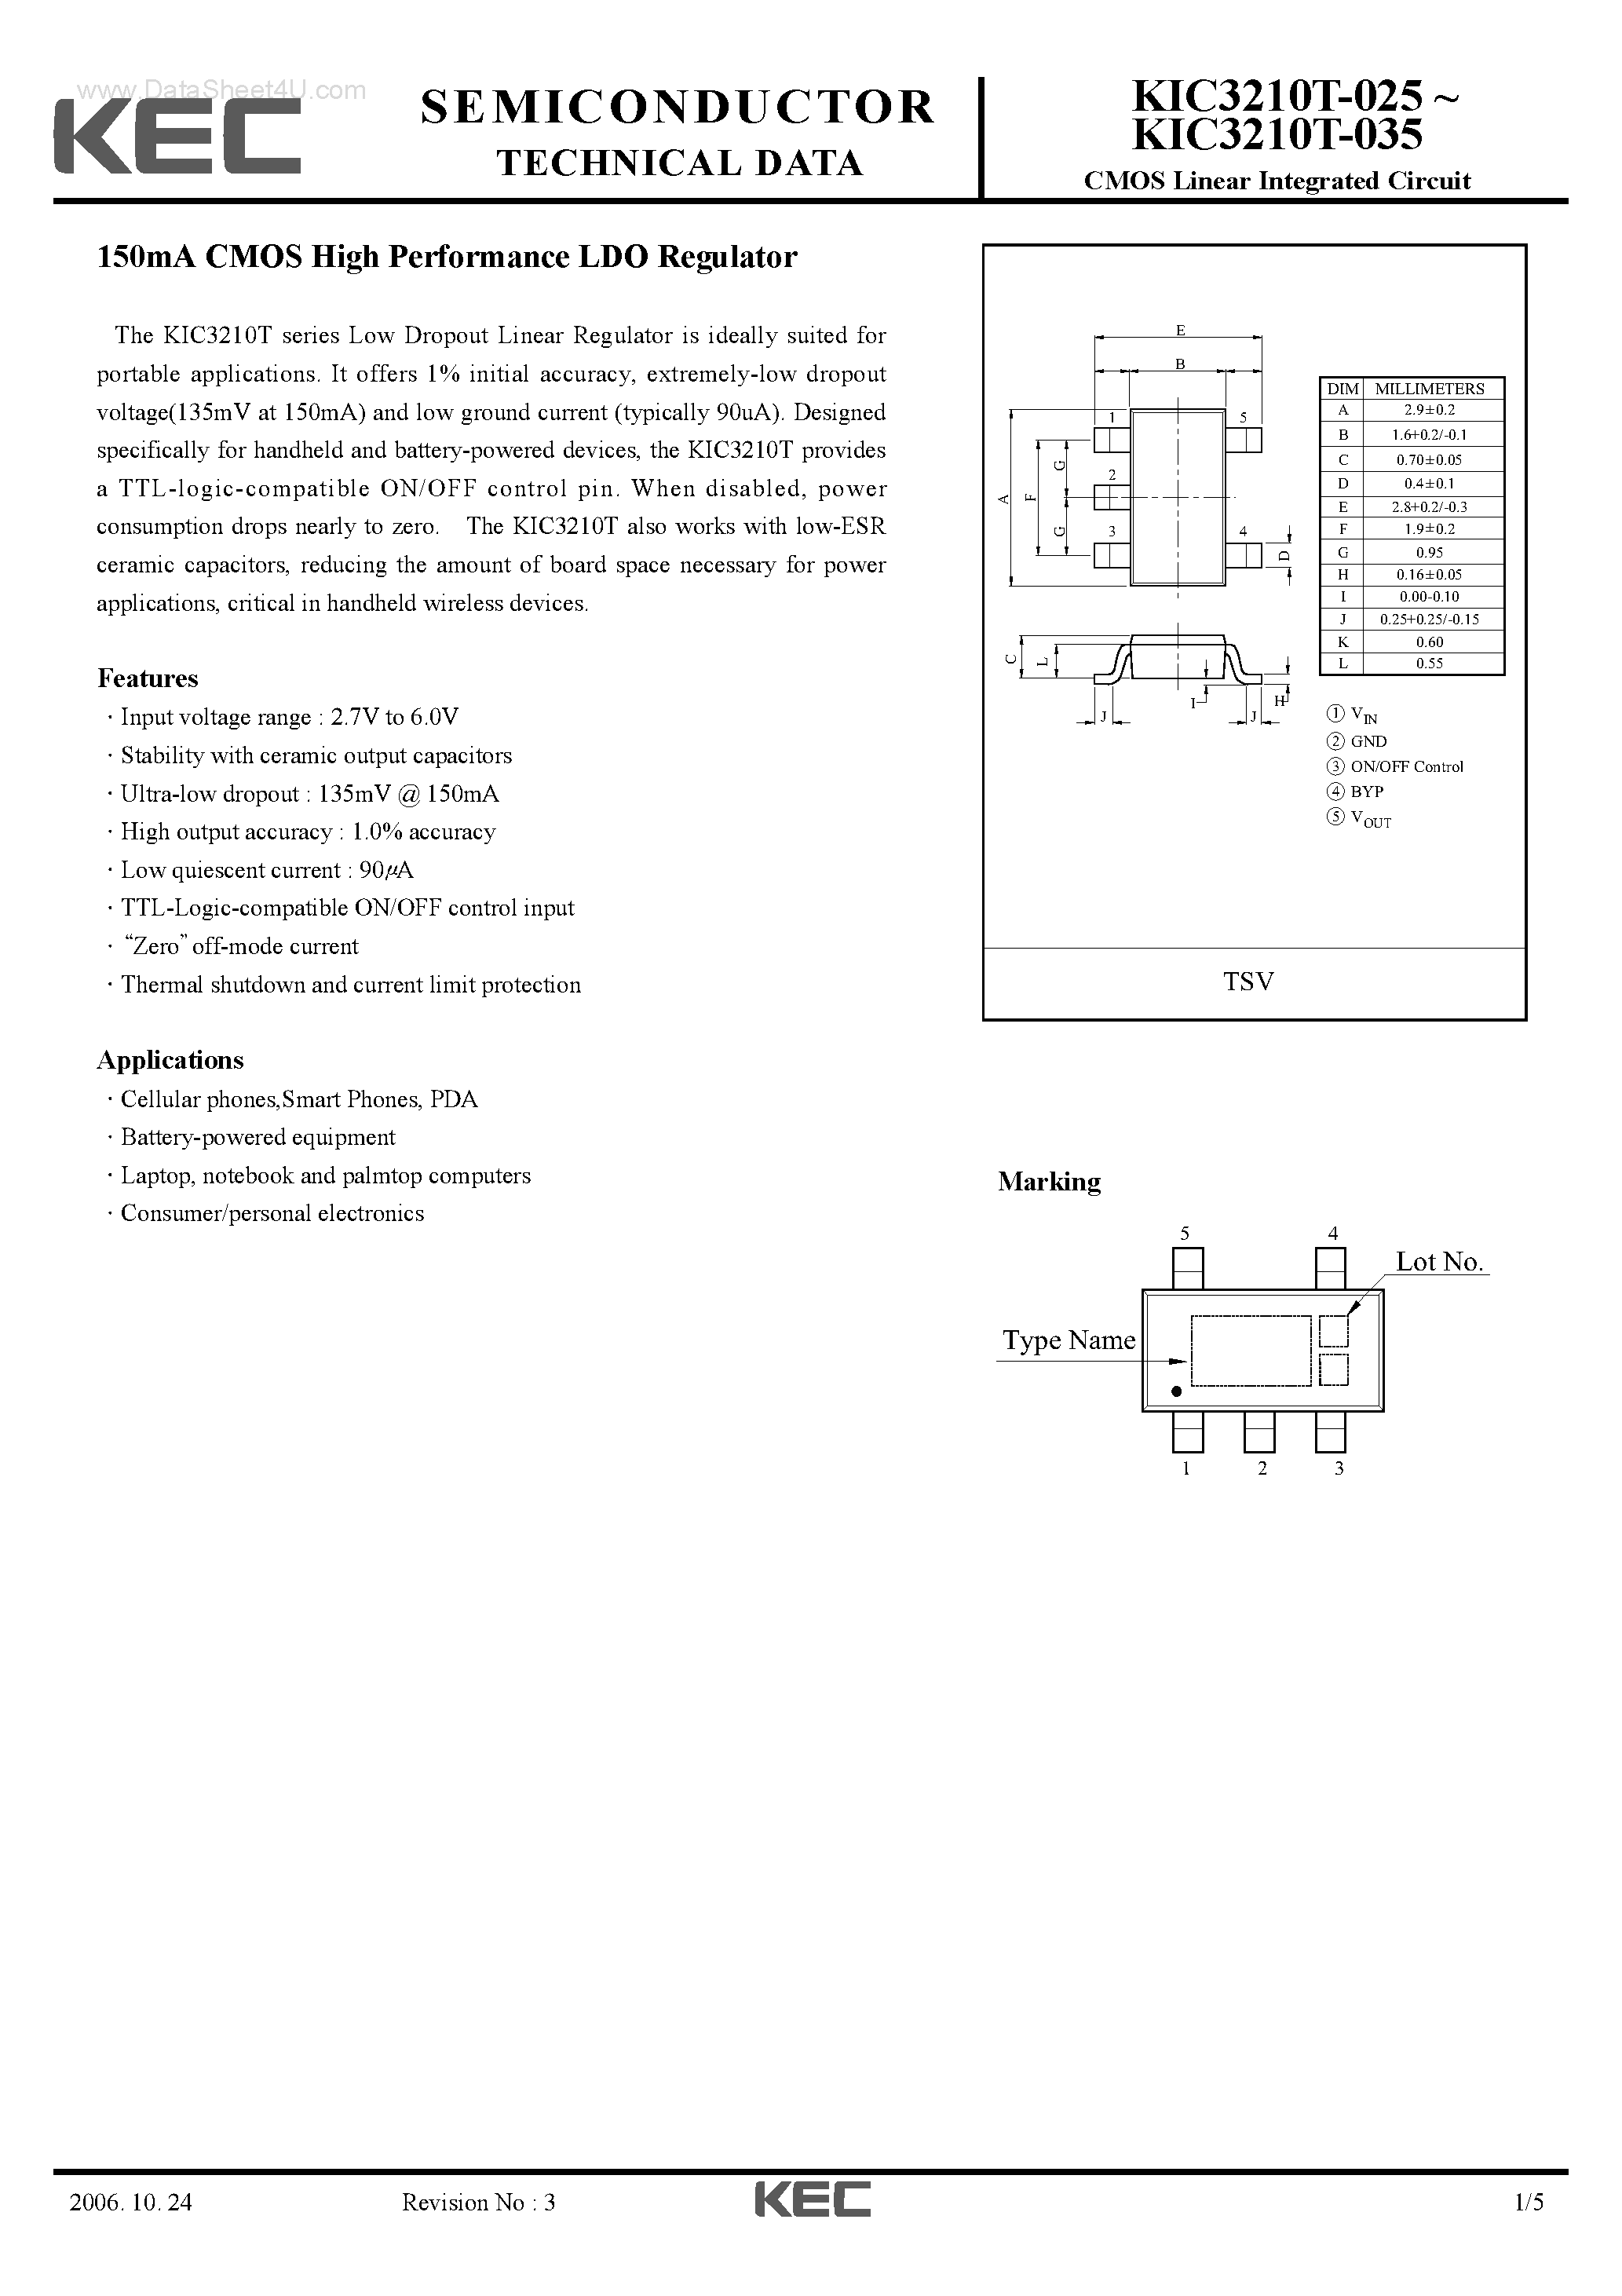 Datasheet KIC3210T-02x - (KIC3210T-0x5) CMOS Linear Integrated Circuit 150mA CMOS High Performance LDO Regulator page 1